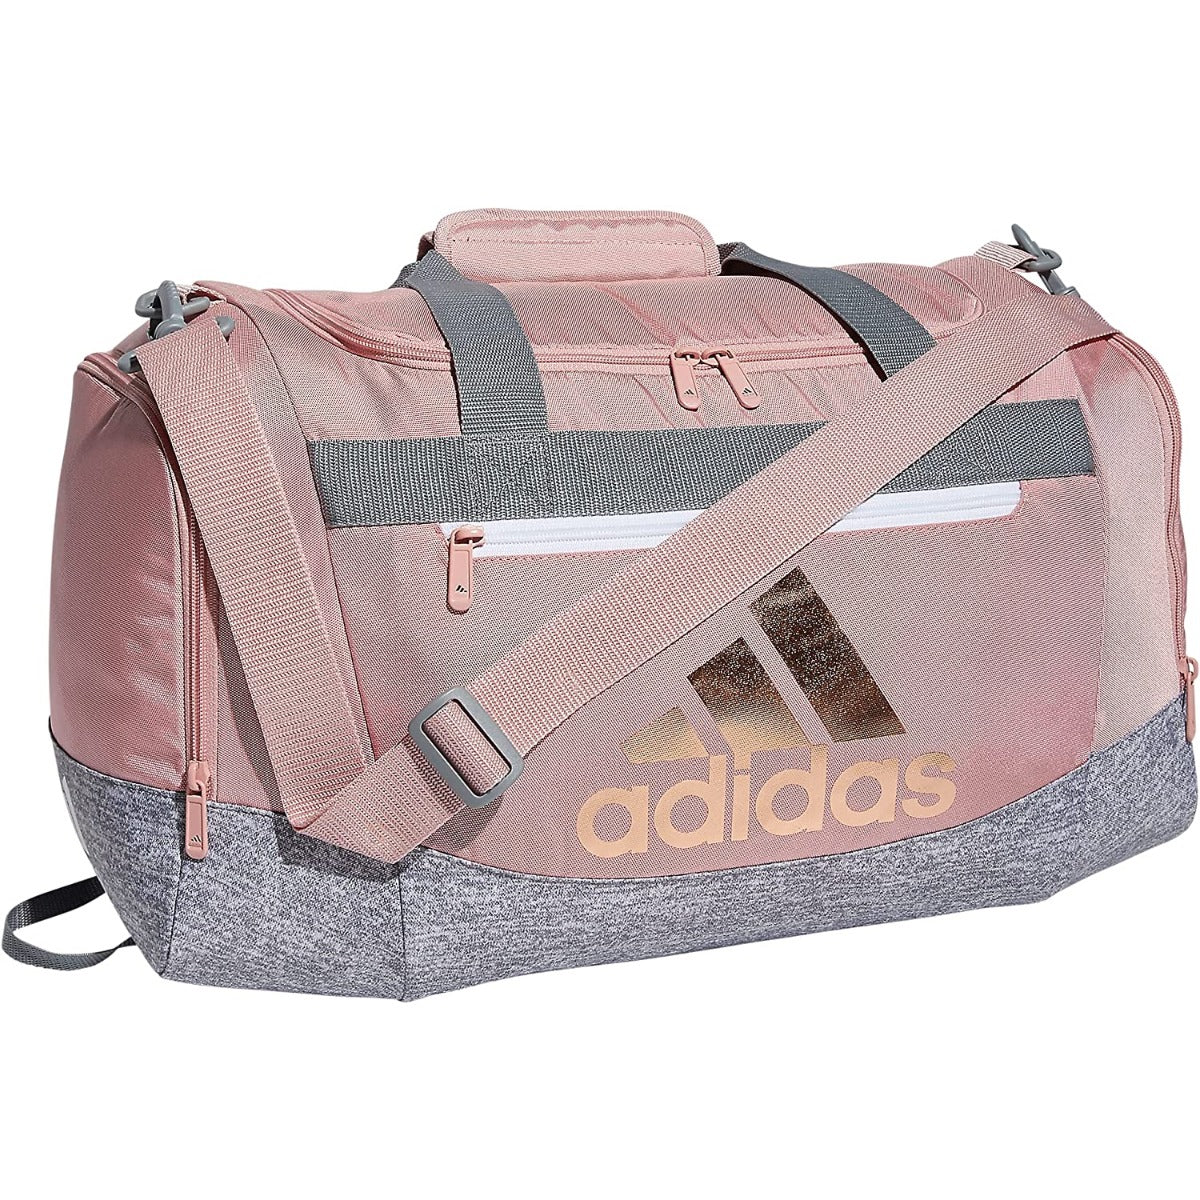 adidas Defender IV Small Duffel Bag - Mauve Pink-Jersey Grey (Front)